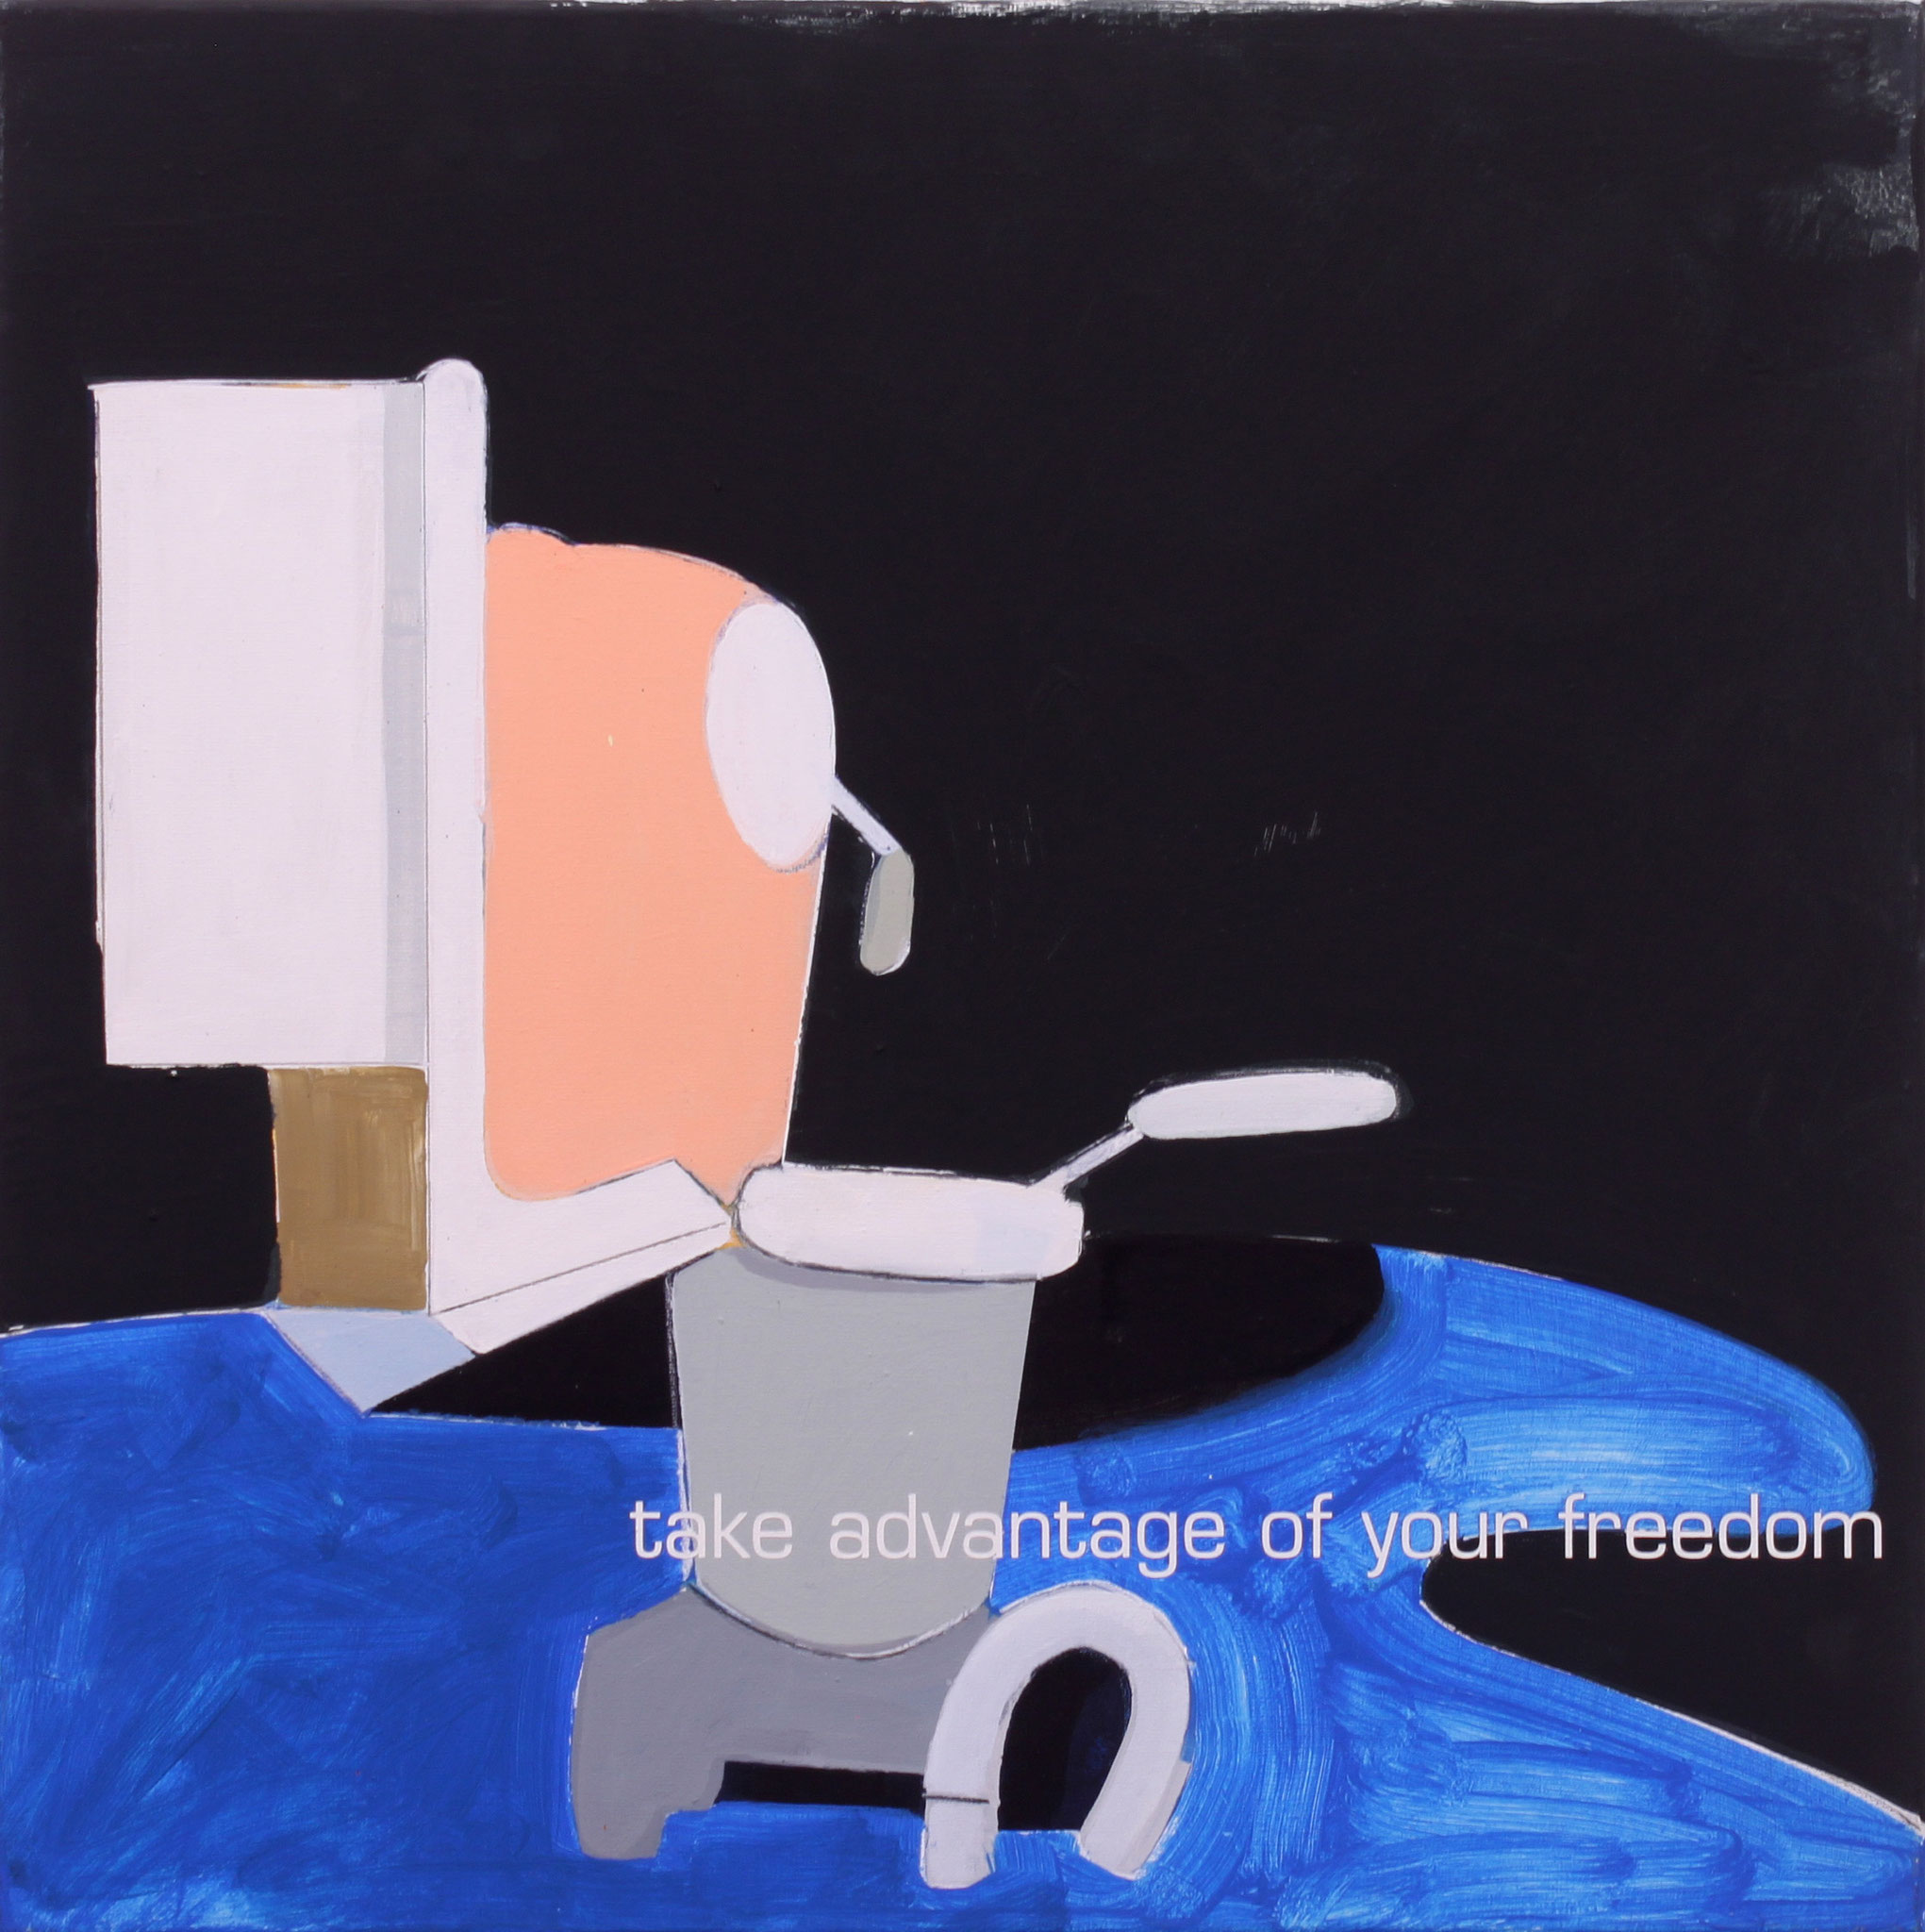 Lucia Dellefant, "take advantage of your freedom", Öl auf Leinwand,  2006